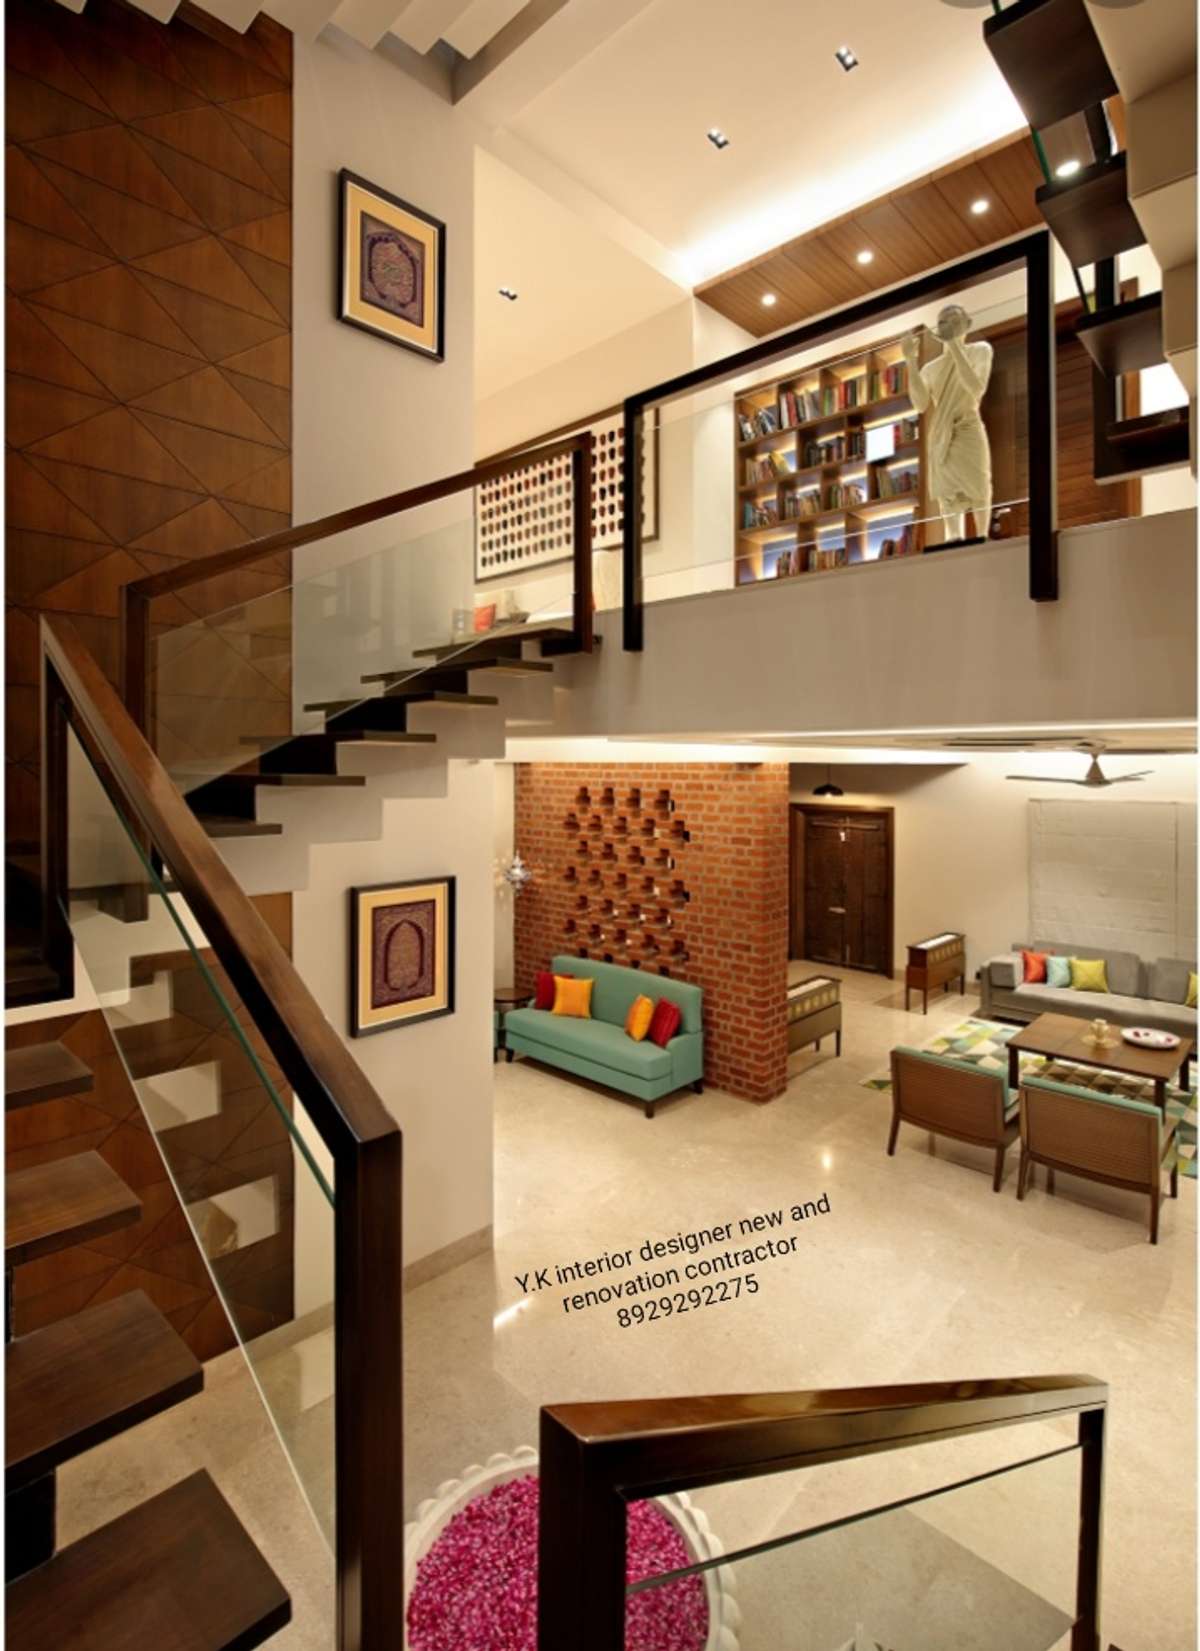 banglow best work interior design Y.K interior designer new and renovation contractor  #ykbestintetior  #ykintetiorroom  #ykbuildingrenovation  #yksuperinterior  #20yearswarranty  #ykbestmarble  #yknewconstructions  #ModularKitchen  #MasterBedroom  #MarbleFlooring  #WoodenKitchen  #KitchenCeilingDesign  #LivingRoomSofa  #LivingRoomCarpets  #3DWallPaper